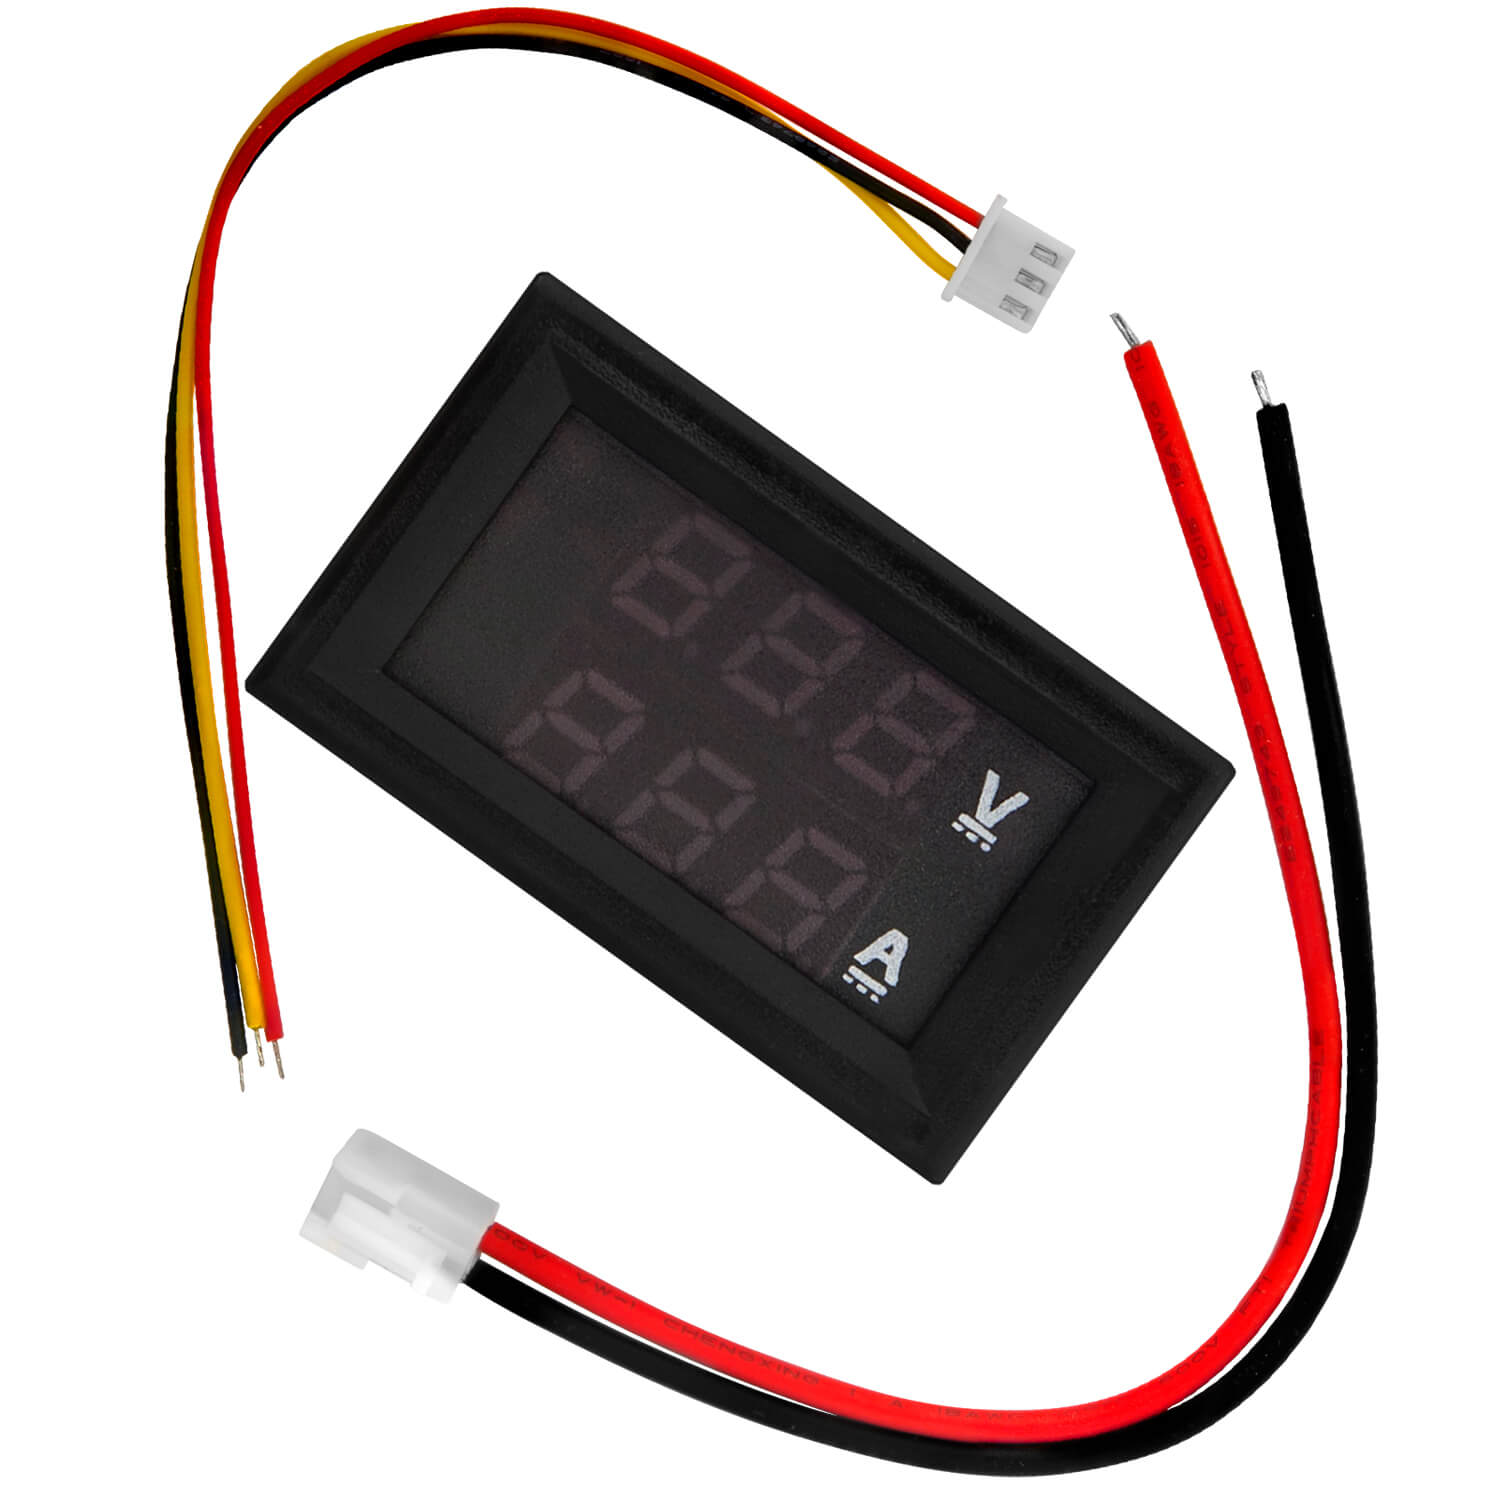 DSN-VC288 Voltmeter Amperemeter Modul mit LED Display kompatibel mit Arduino und Raspberry Pi - AZ-Delivery